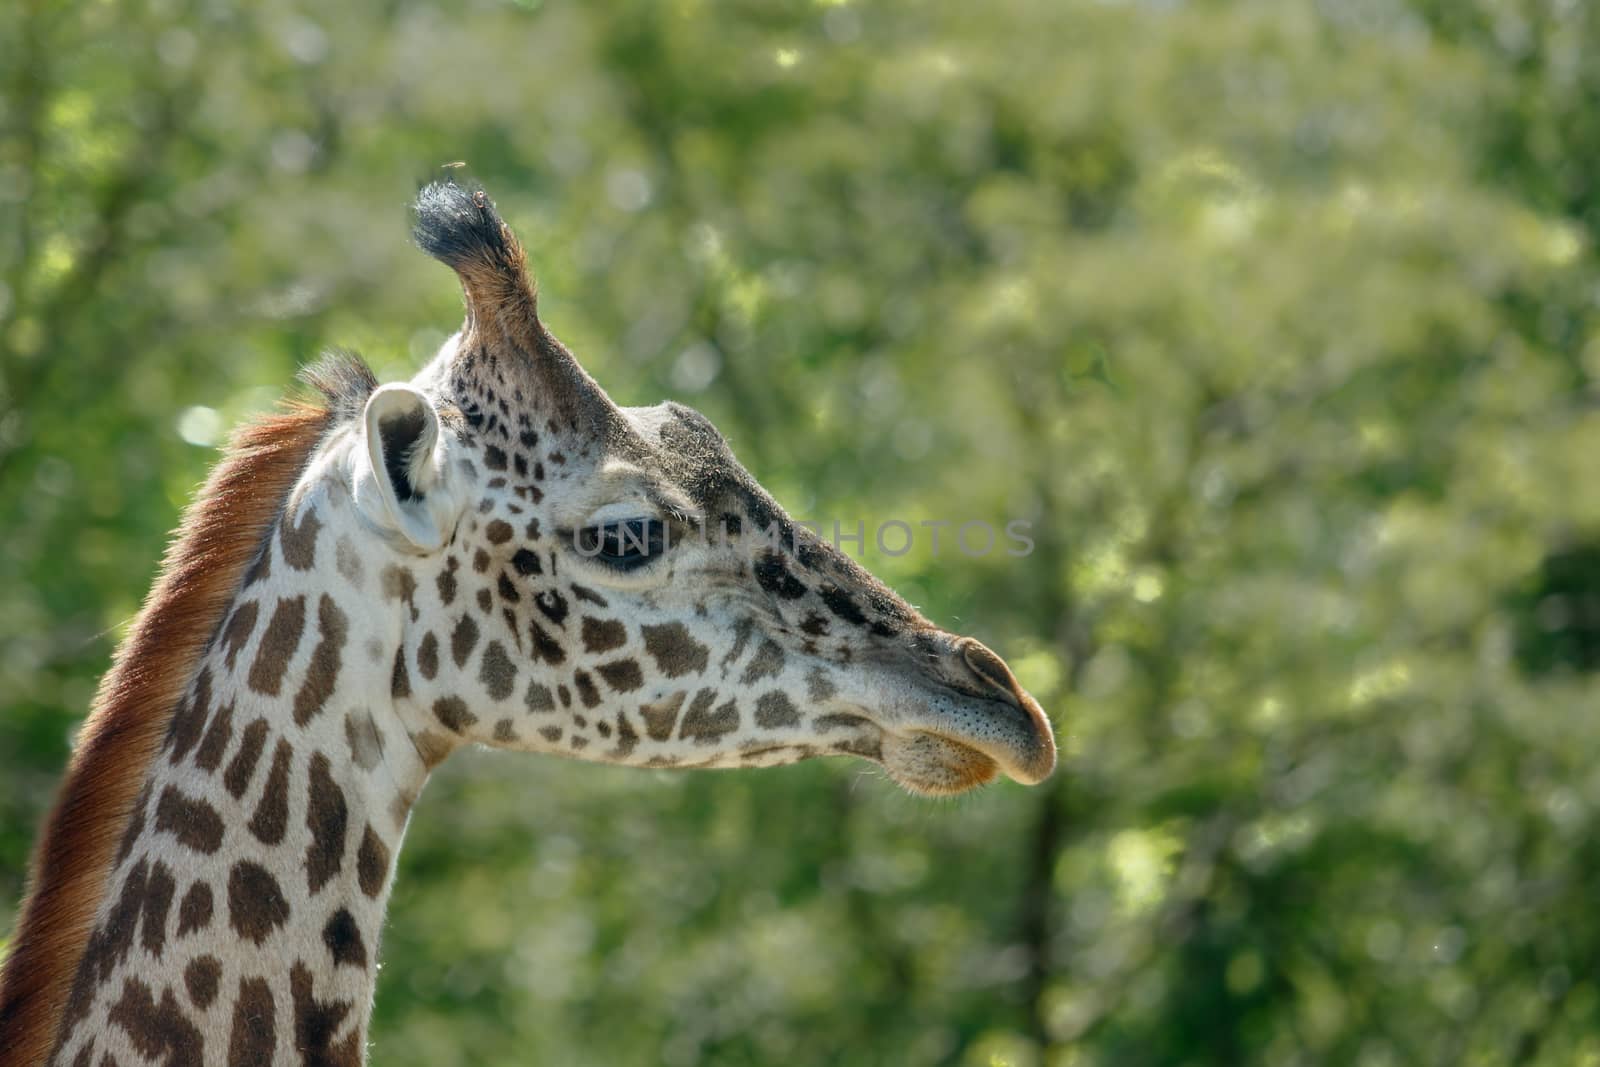 Giraffe head by lprising